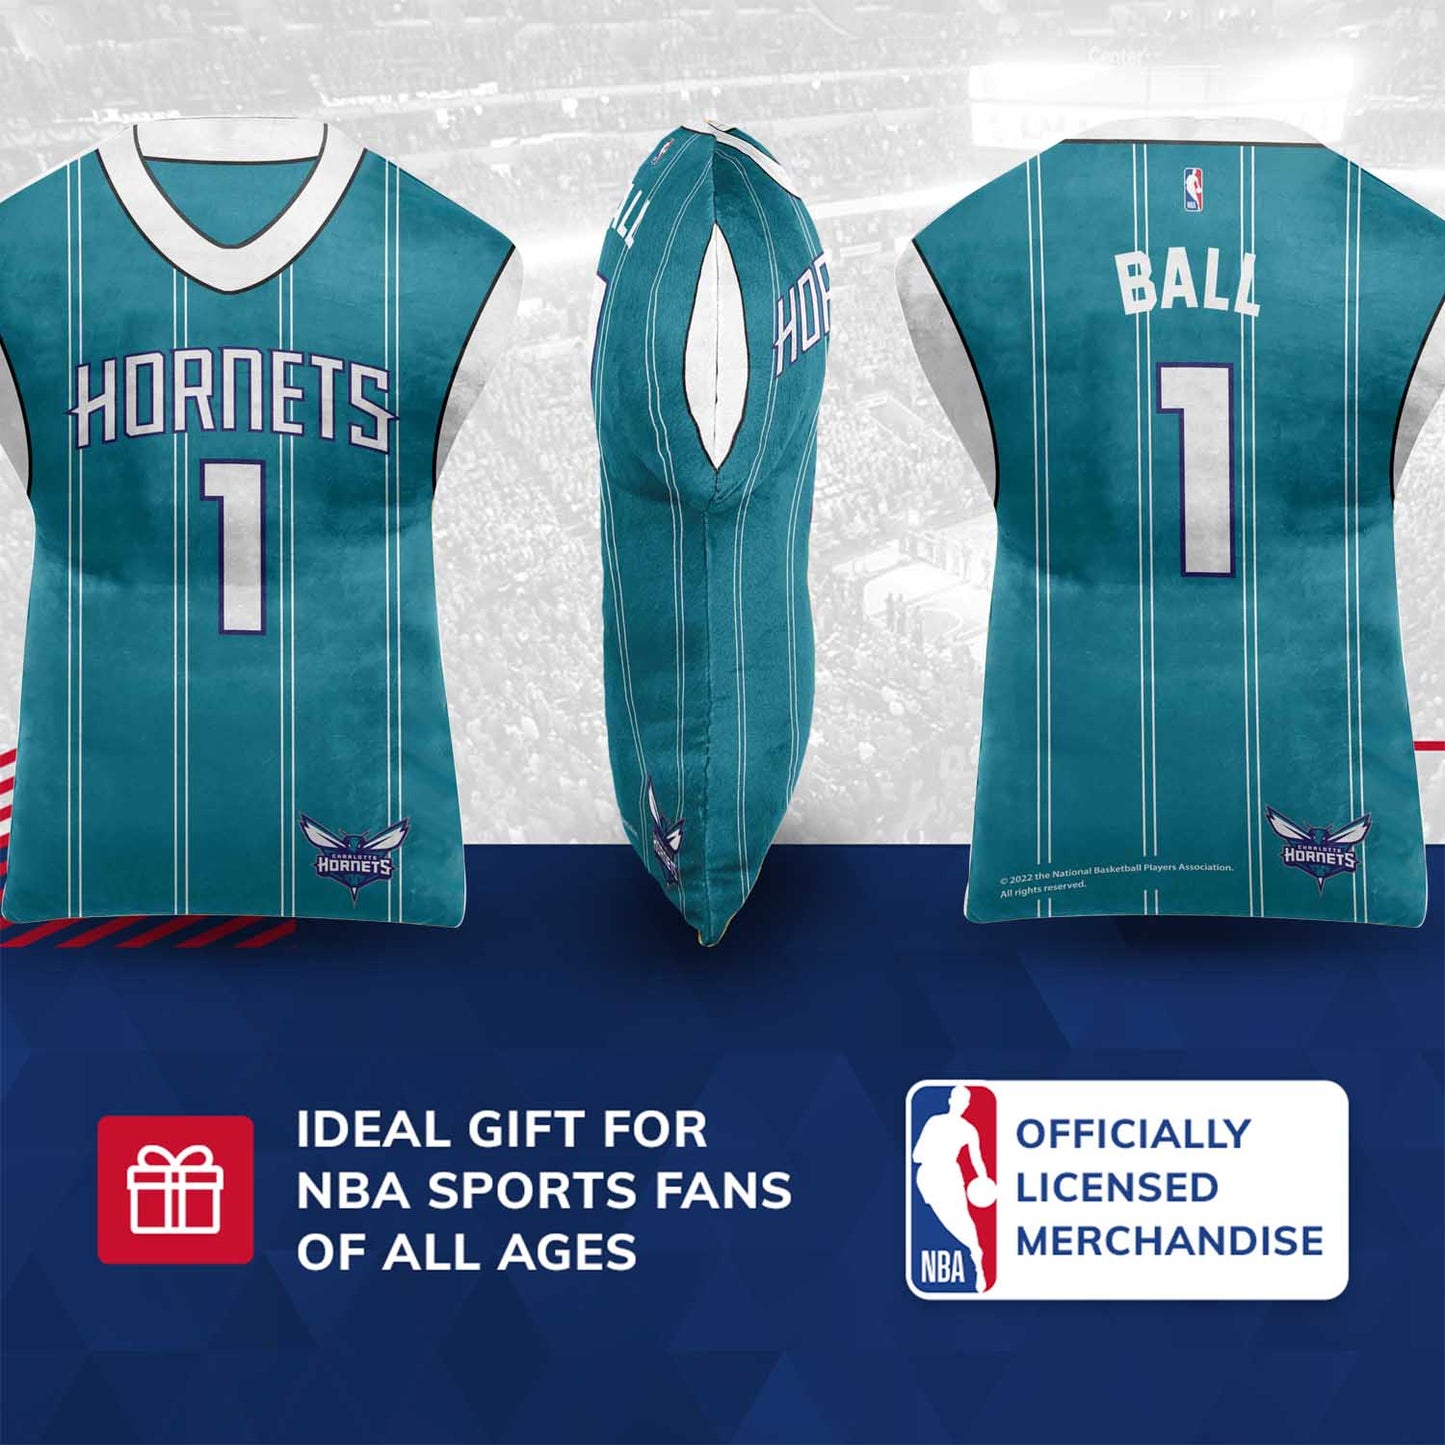 Charlotte Hornets NBA Travel LaMelo Ball Jersey Cloud Pillow Bedding Accessories - Teal